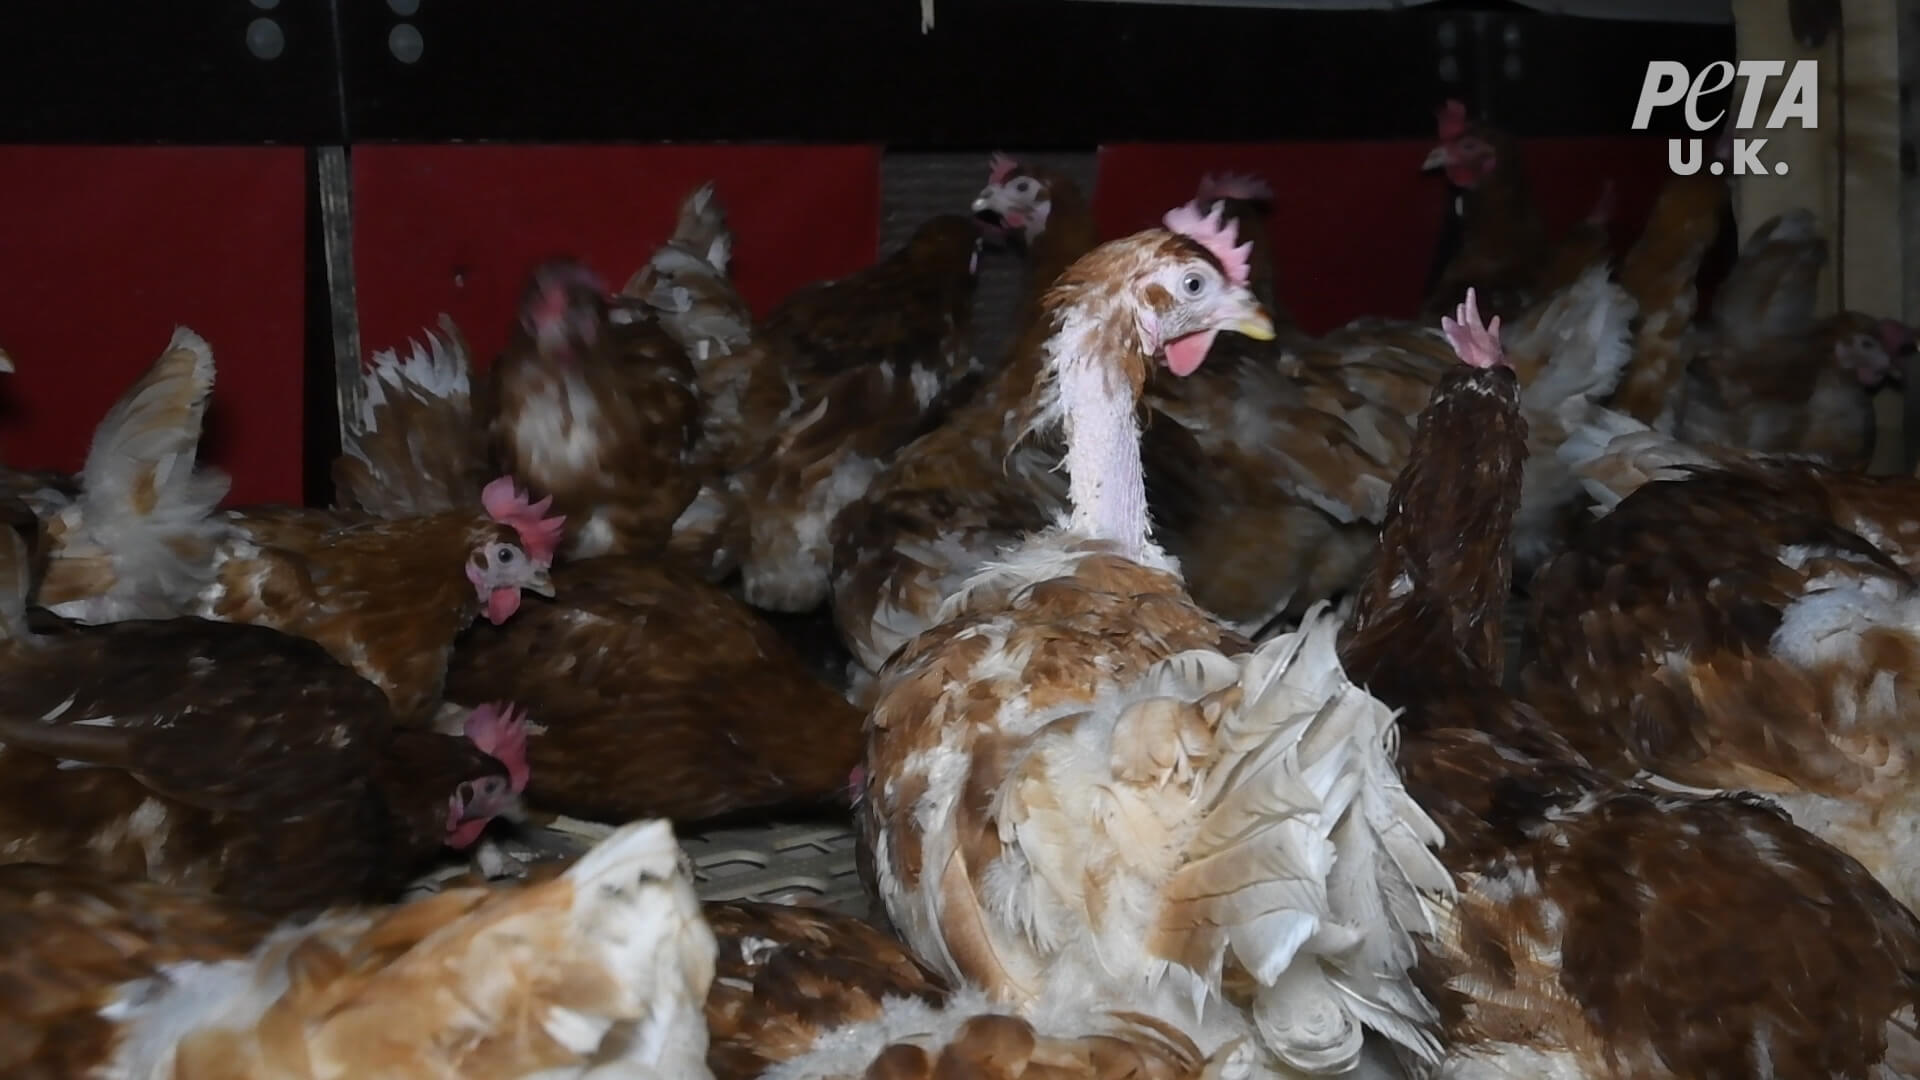 https://investigaciones.petalatino.com/wp-content/uploads/2021/02/VEG-UK-Happy-Egg-Investigation-Chickens-Hens-07.jpg